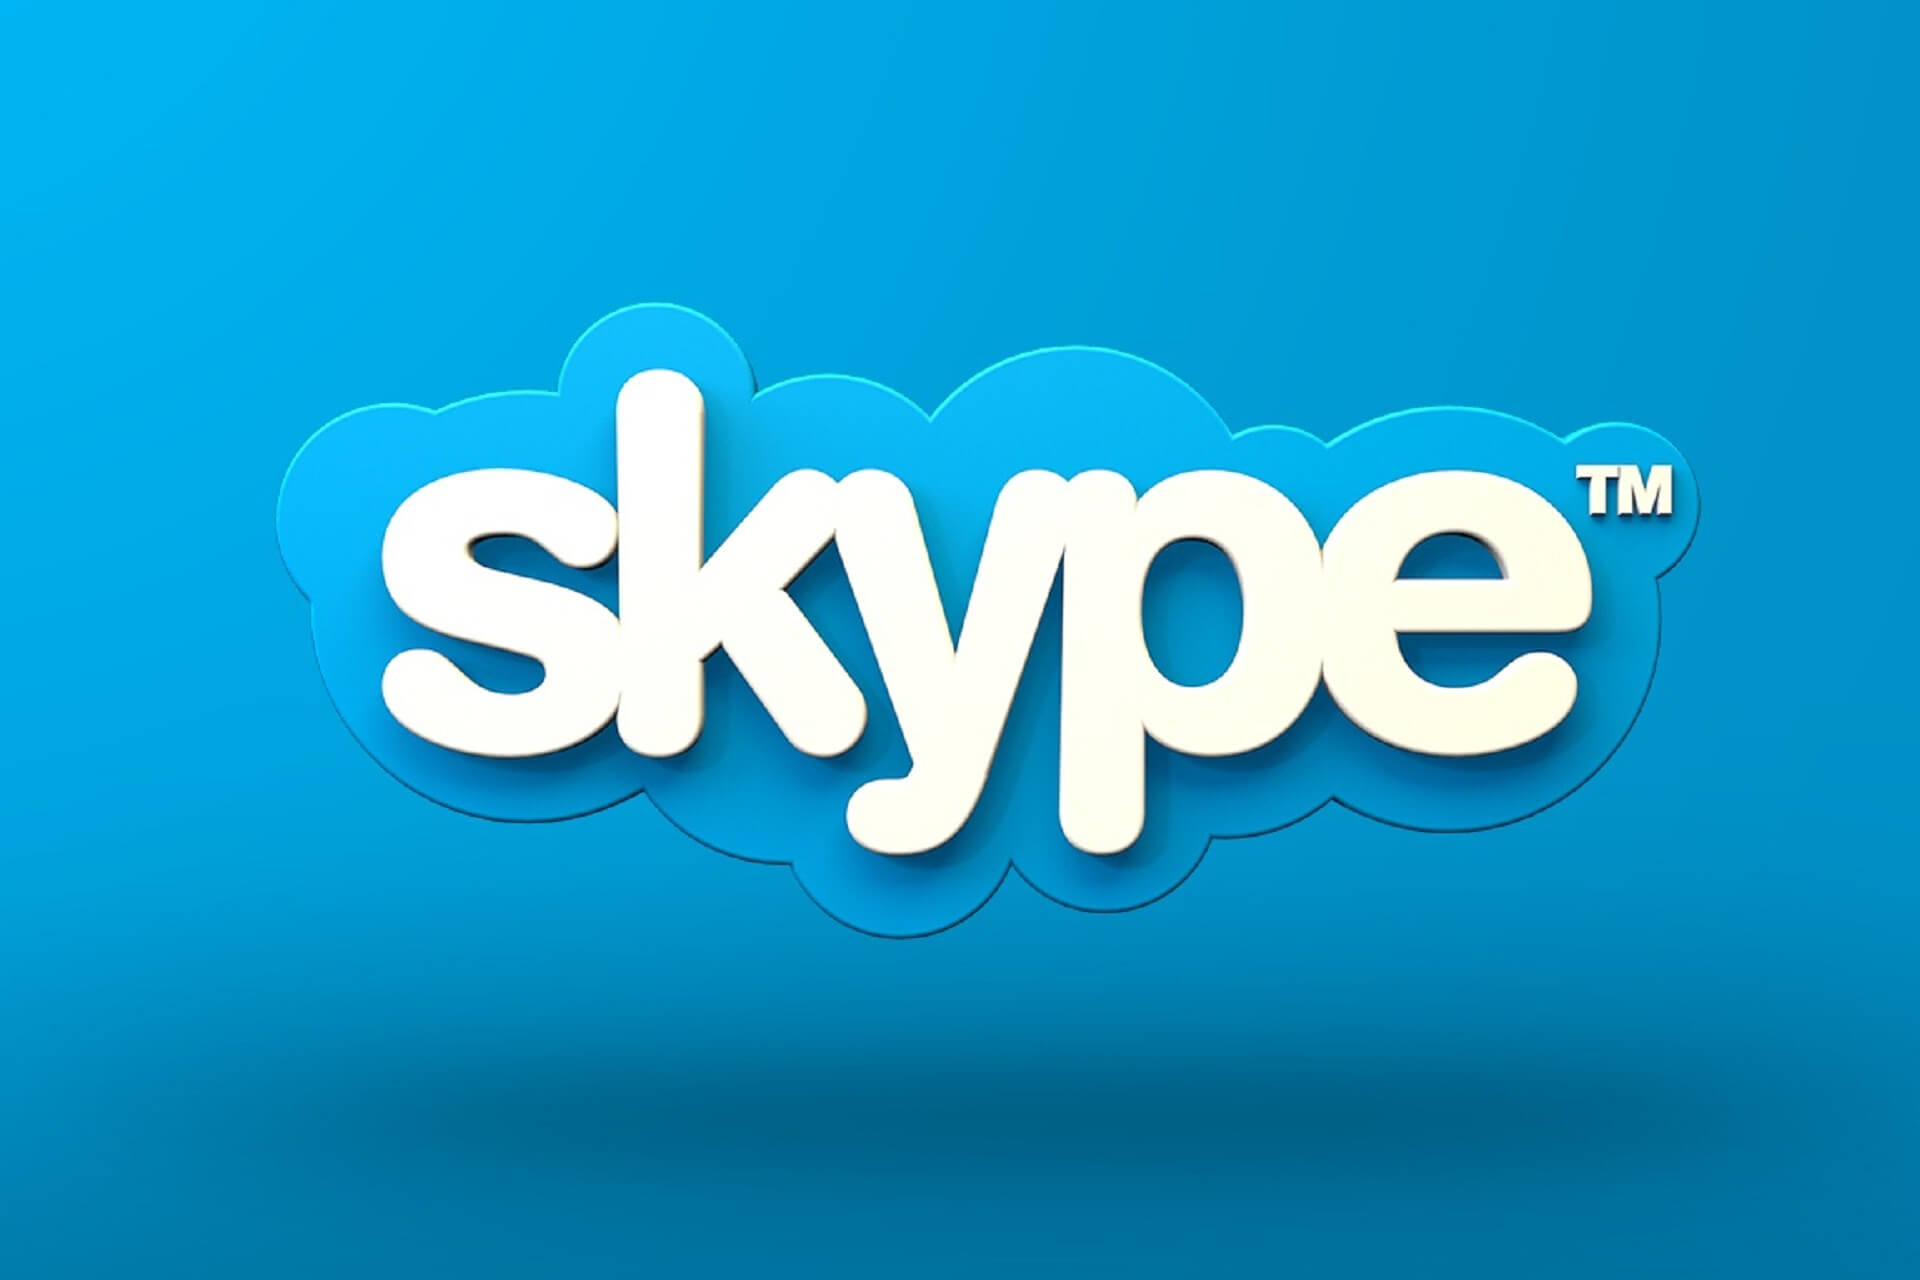 skype 7.3 skype technologies